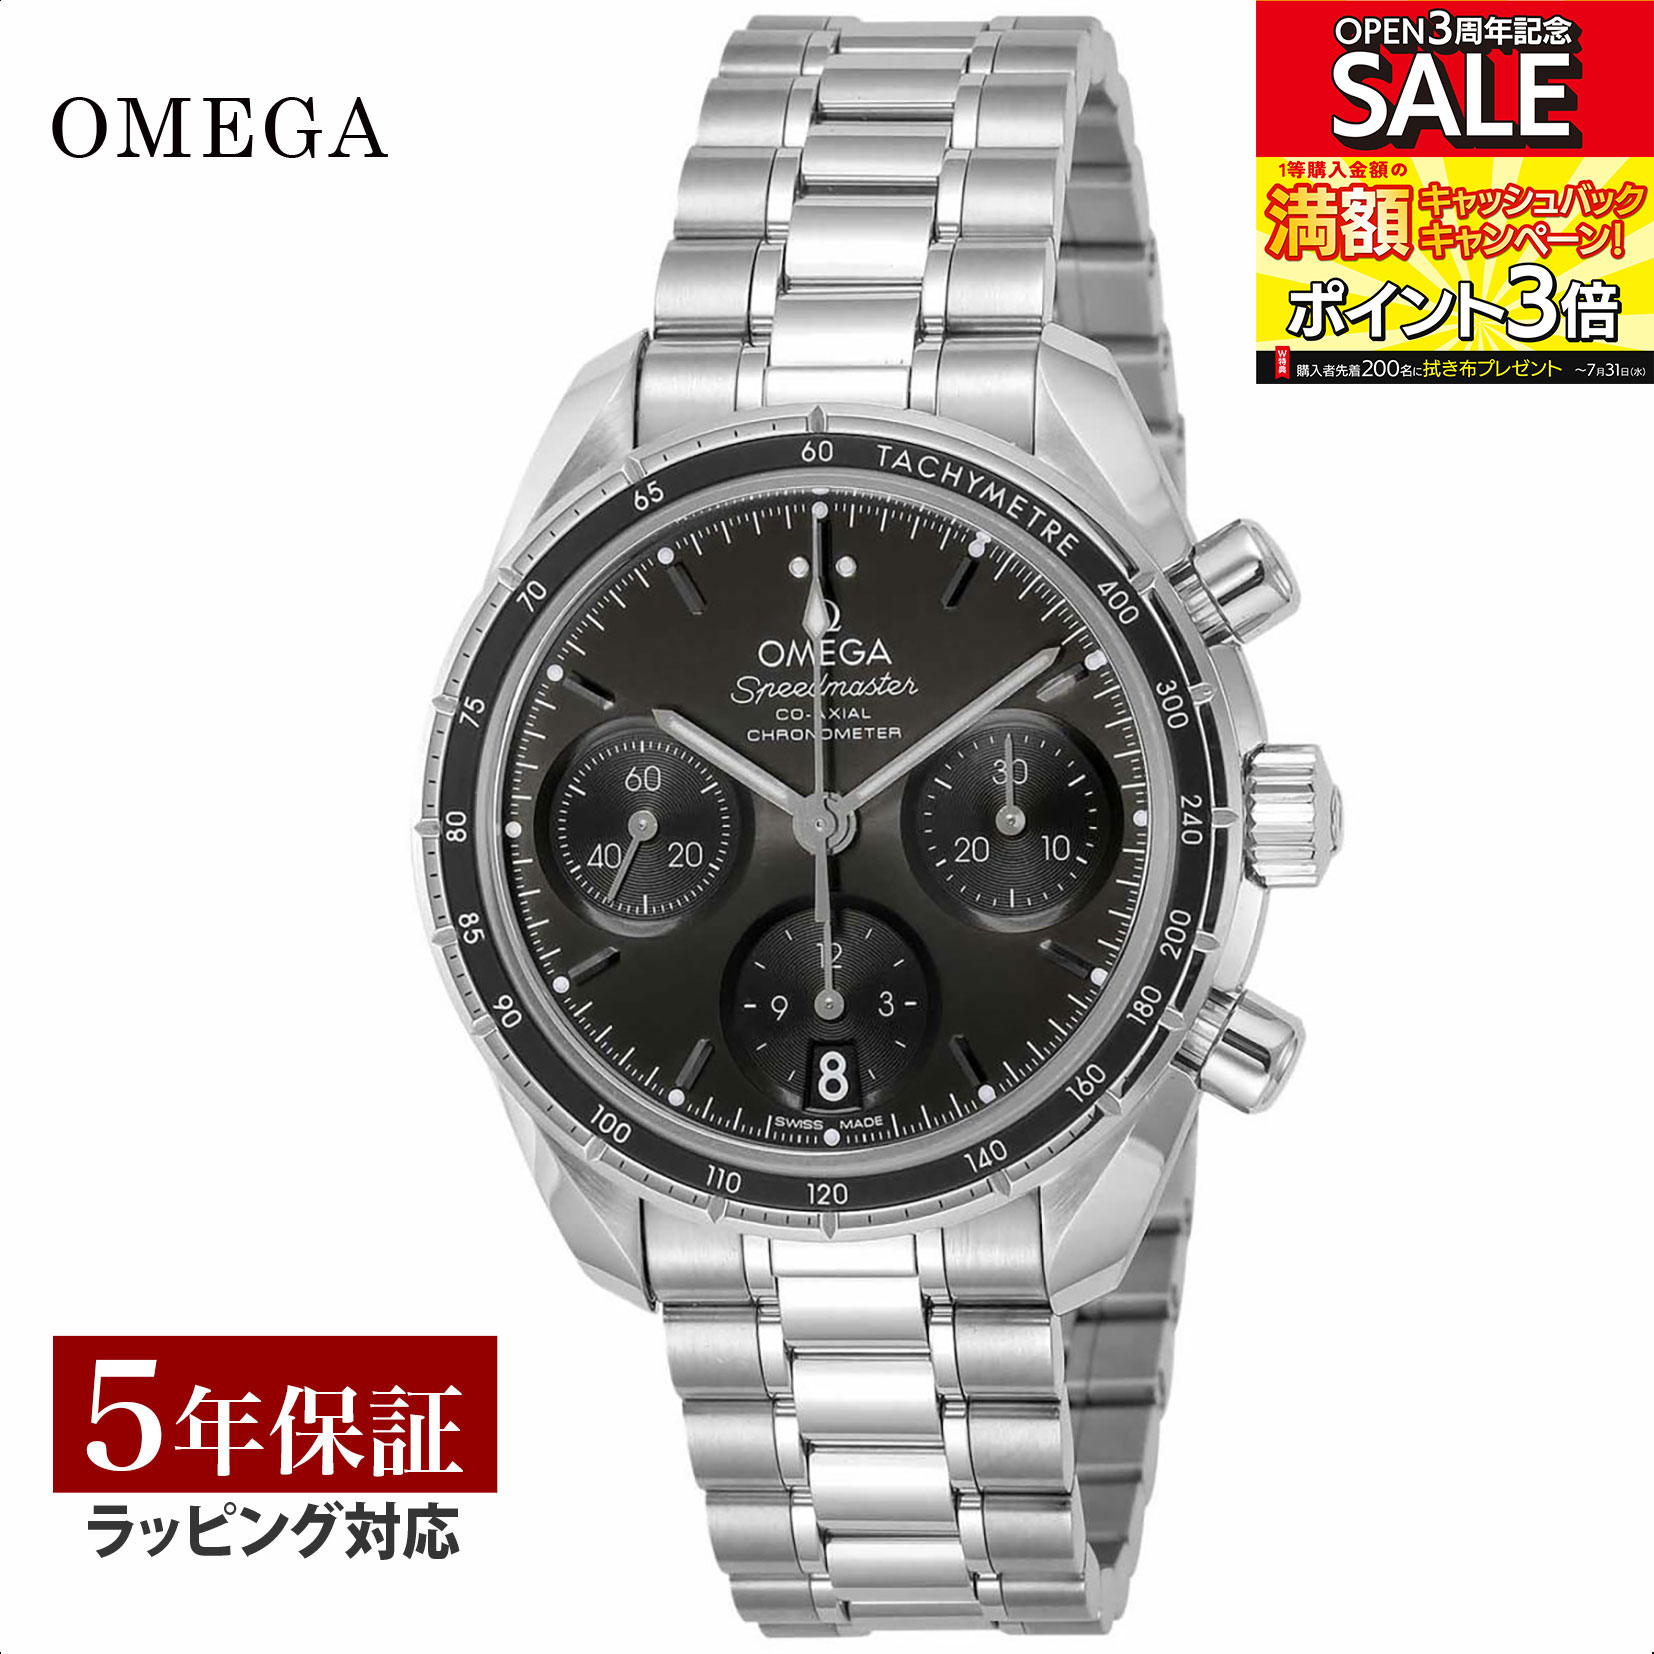 OMEGA オメガ スピードマスター コーアクシャル自動巻 ユニセックス ブラック 324.30.38.50.01.001 時計 腕時計 高級腕時計 ブランド